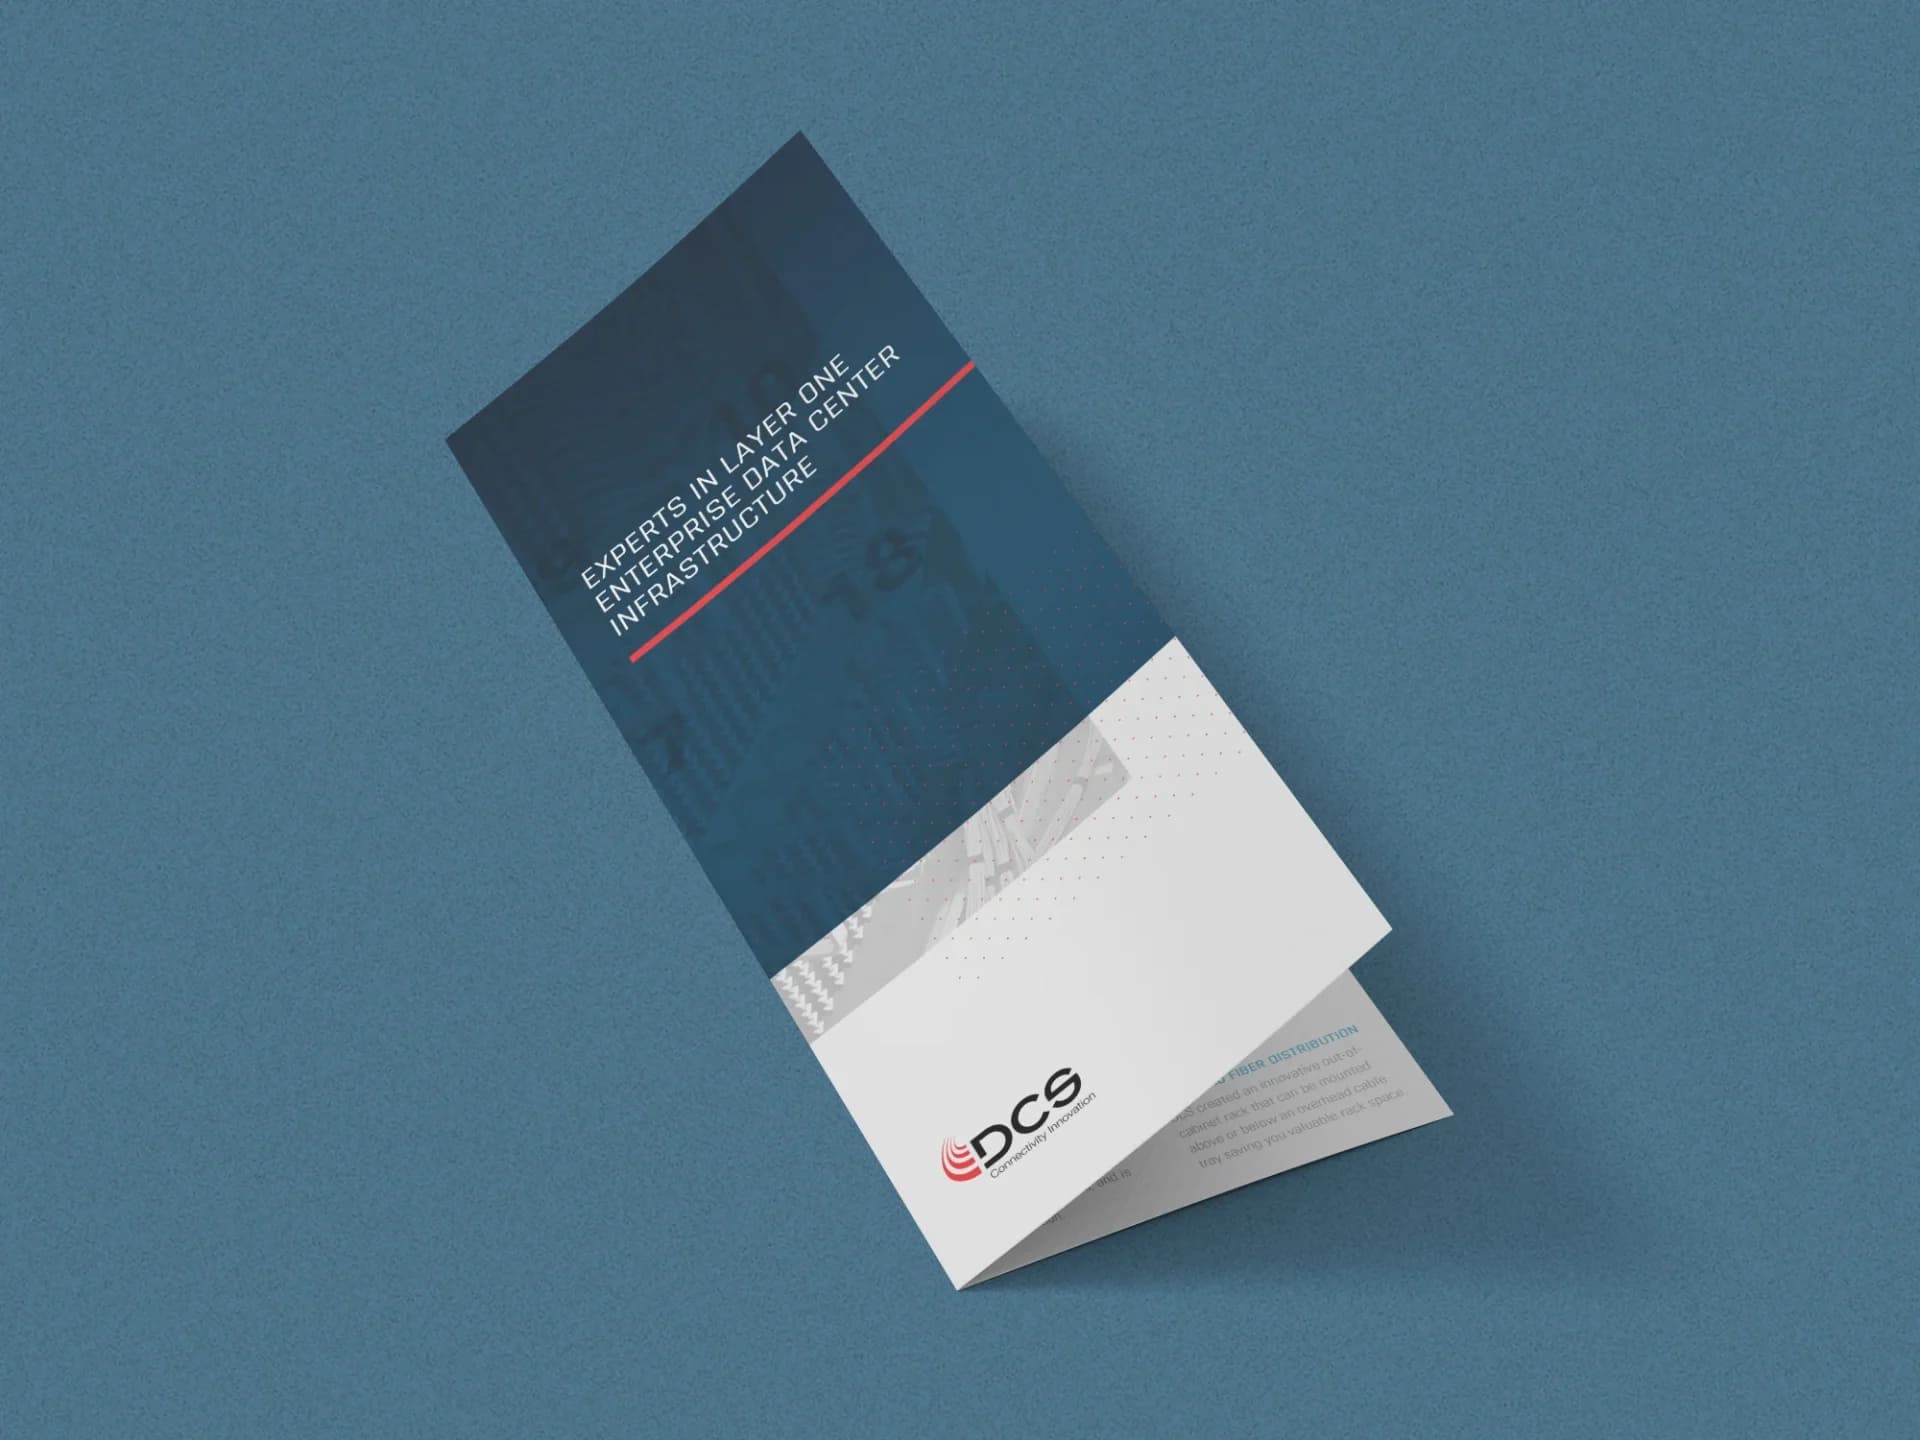 A folded brochure on a blue background